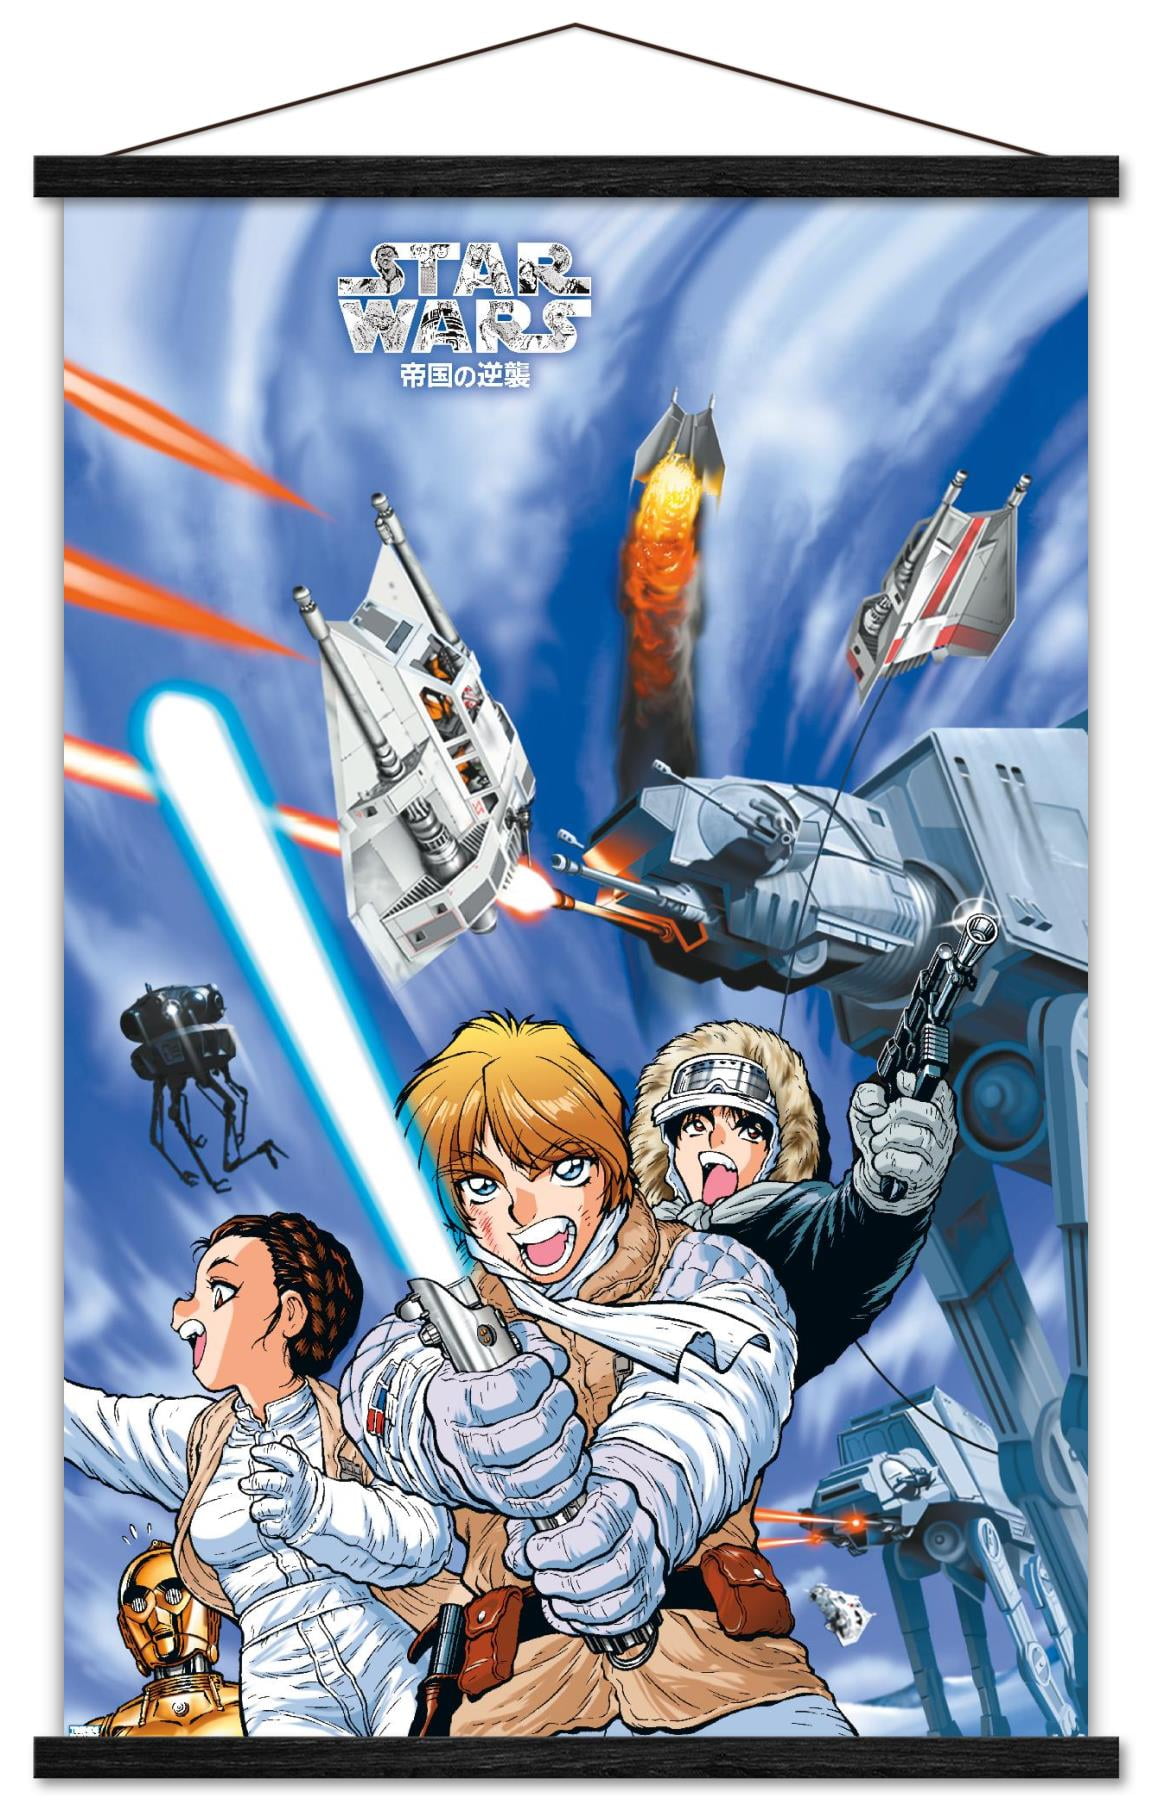 Knight's & Magic Manga Poster – My Hot Posters